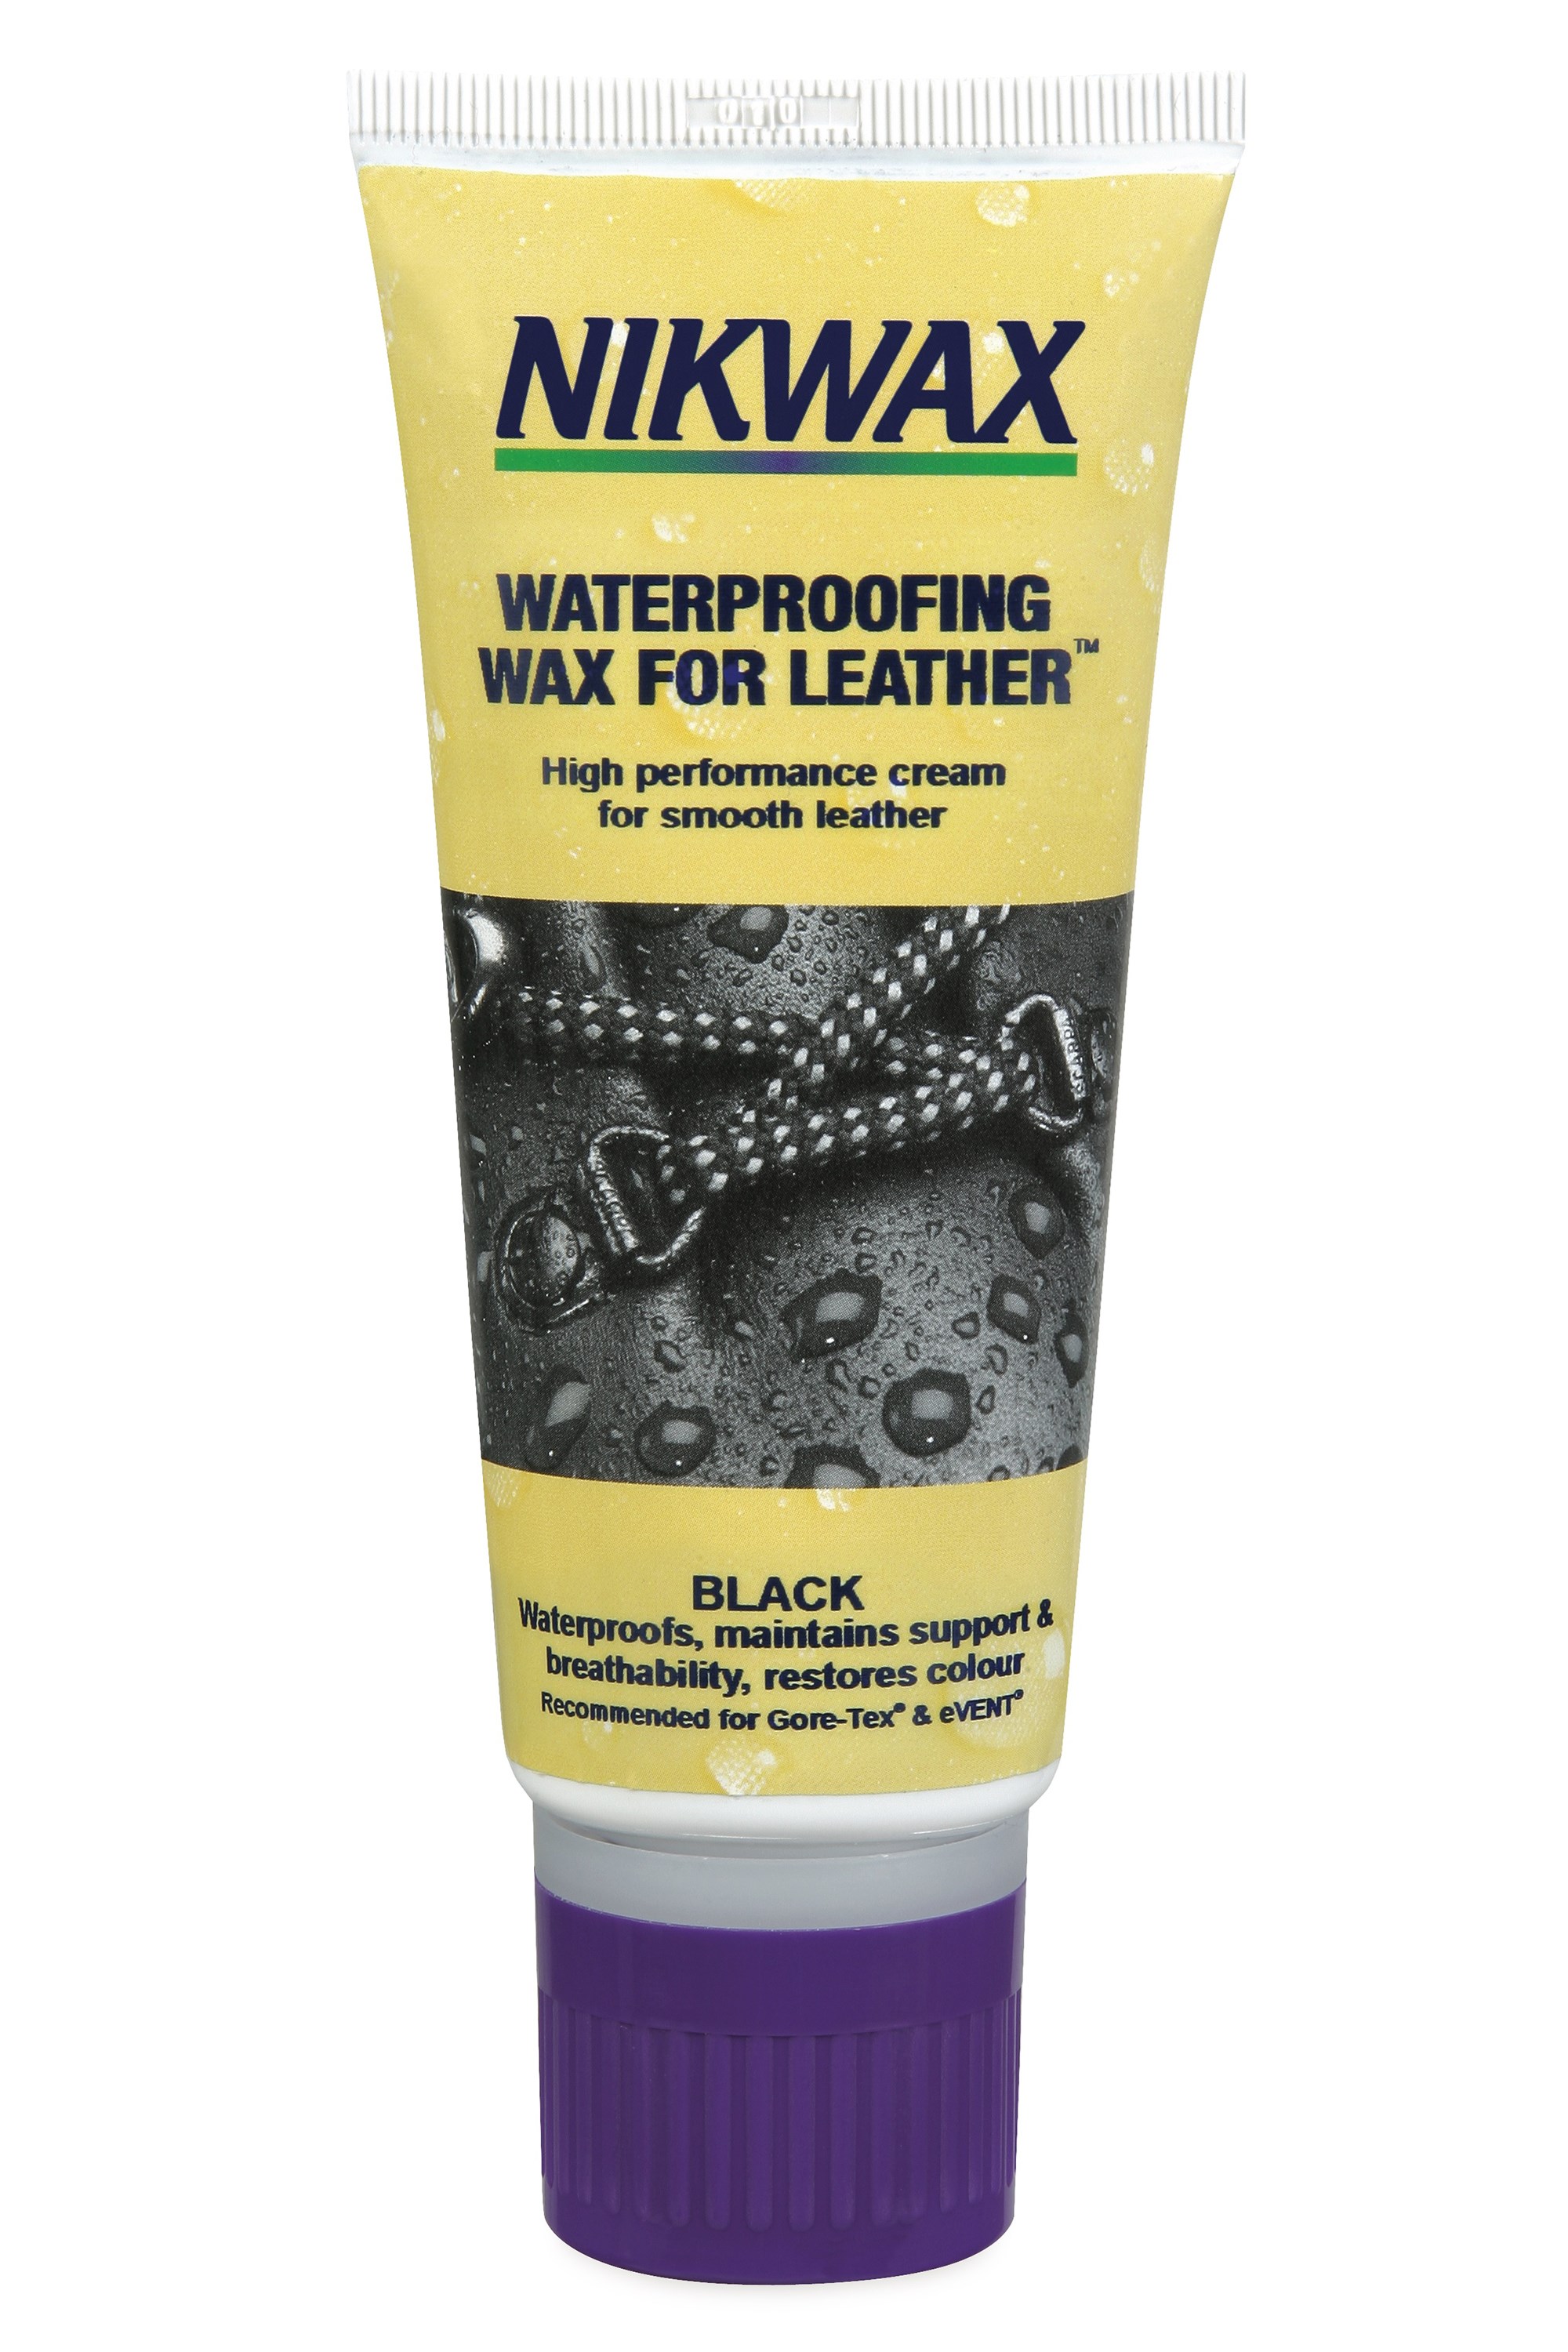 Nikwax Black Waterproofing Wax for Leather - 100ml - ONE